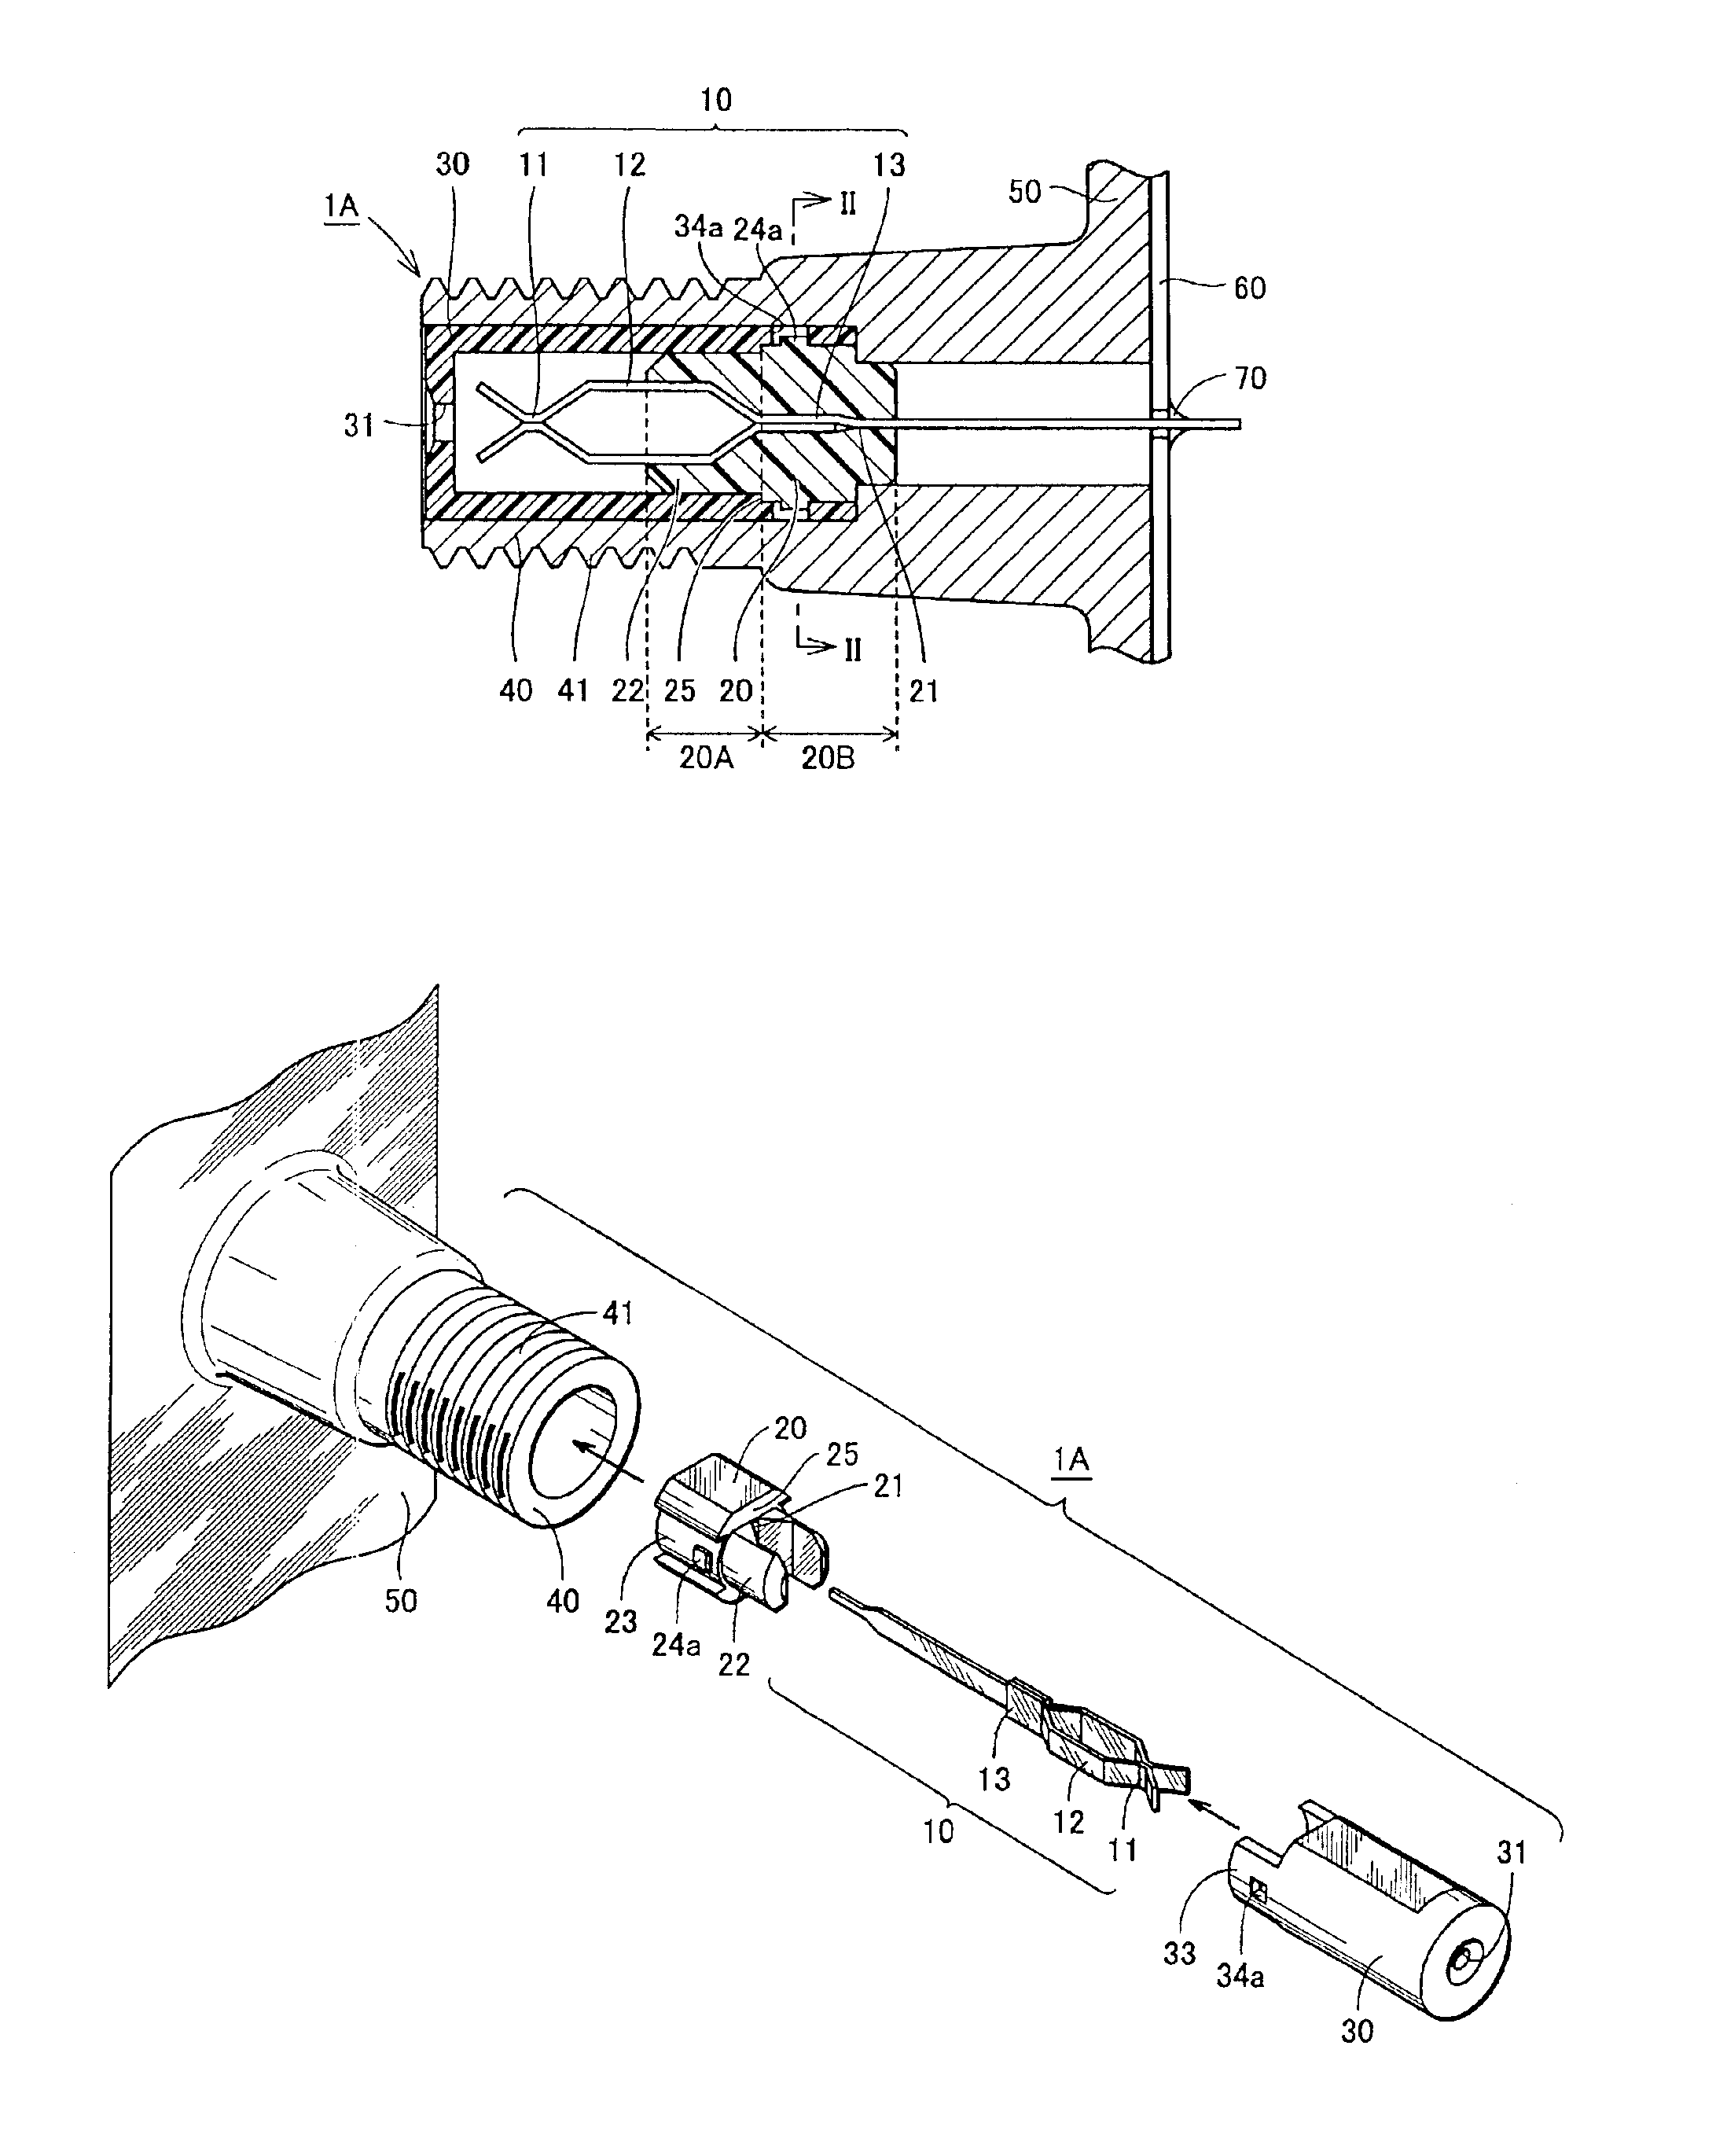 Coaxial connector for receiving a connector plug